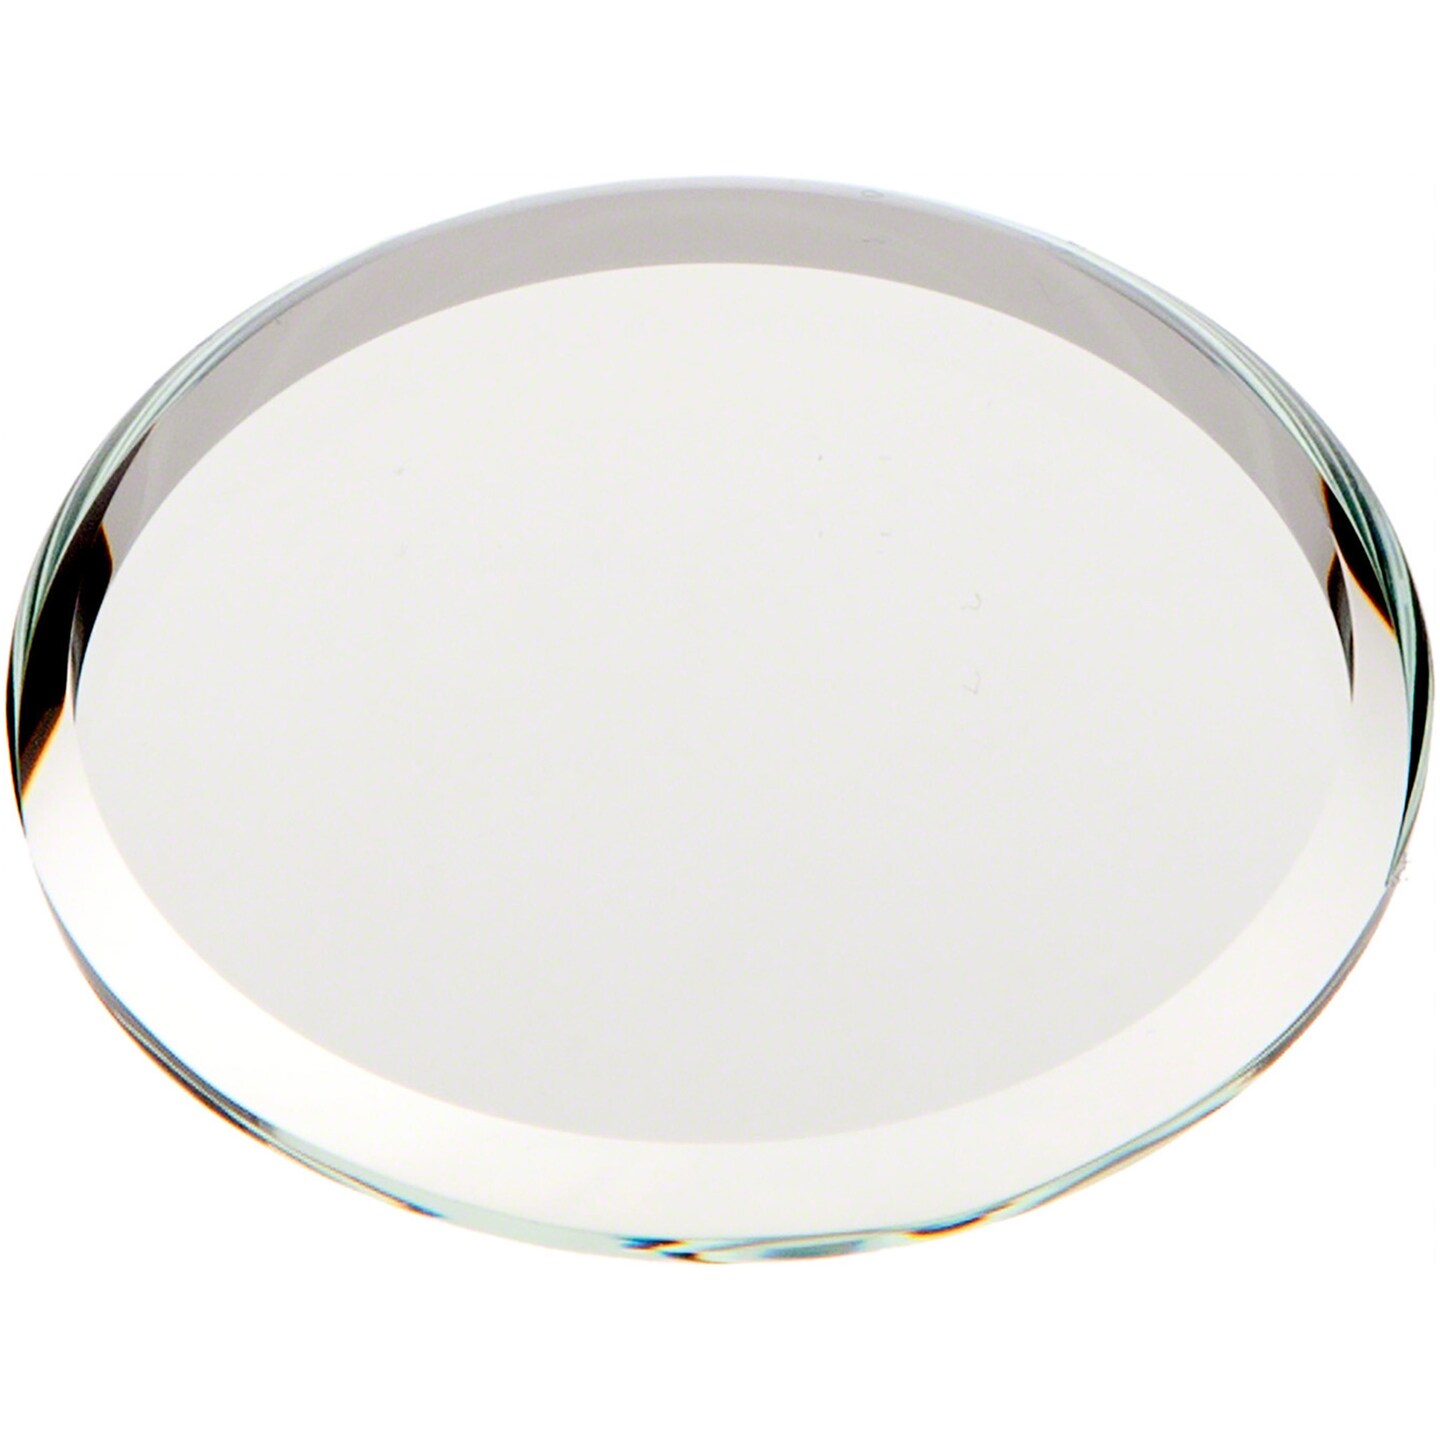 Plymor Round 3mm Beveled Glass Mirror, 1.5 inch x 1.5 inch